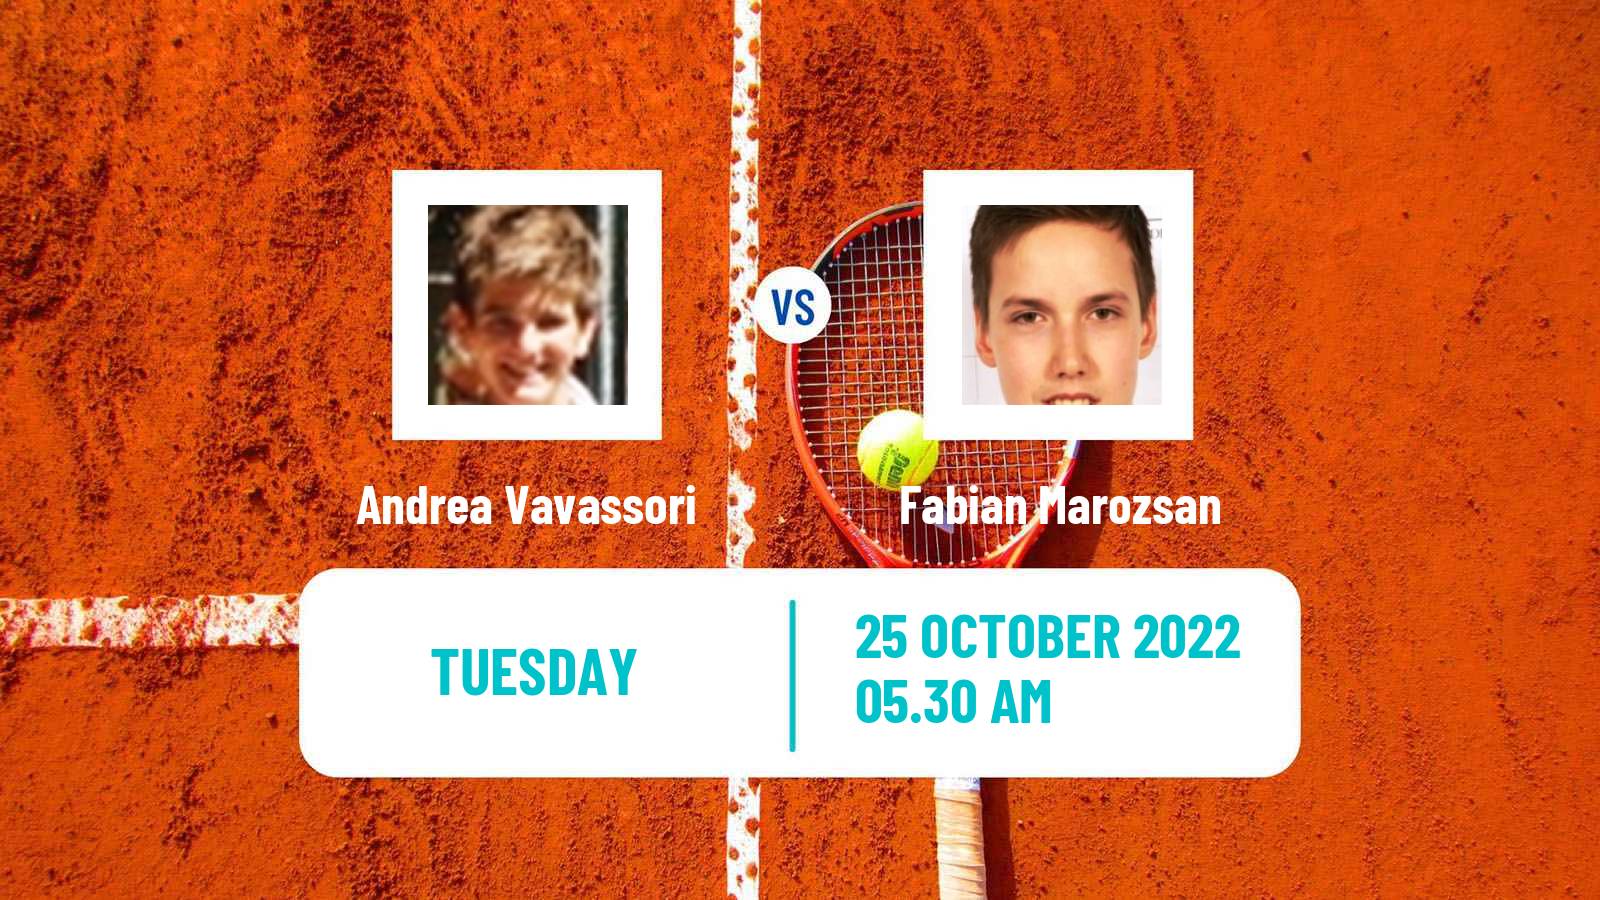 Tennis ATP Challenger Andrea Vavassori - Fabian Marozsan